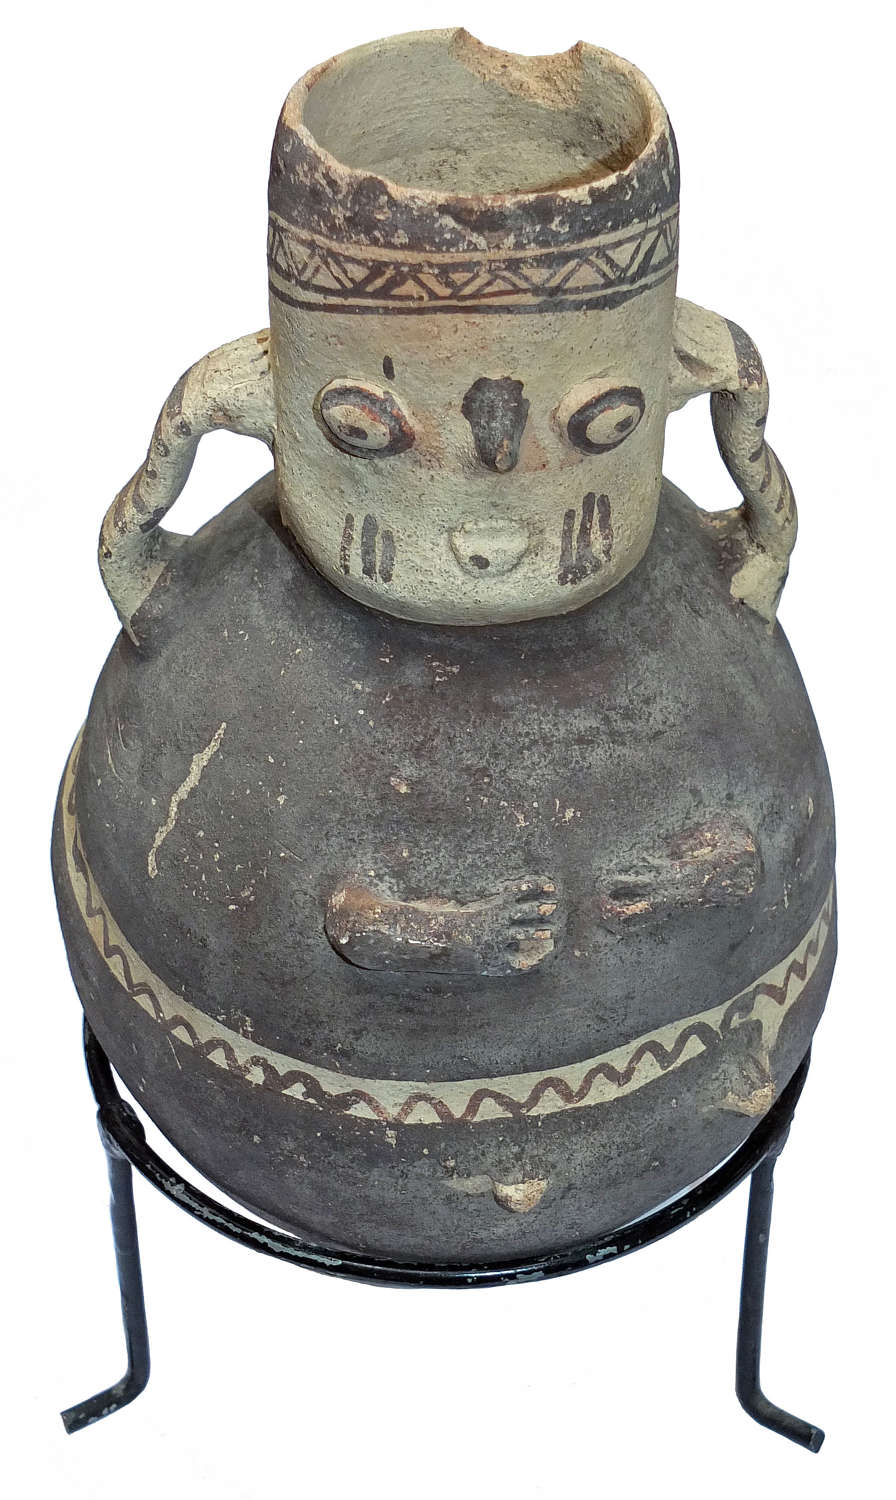 A Chancay ovoid pottery vessel, Peru, c. 1000-1400 A.D.